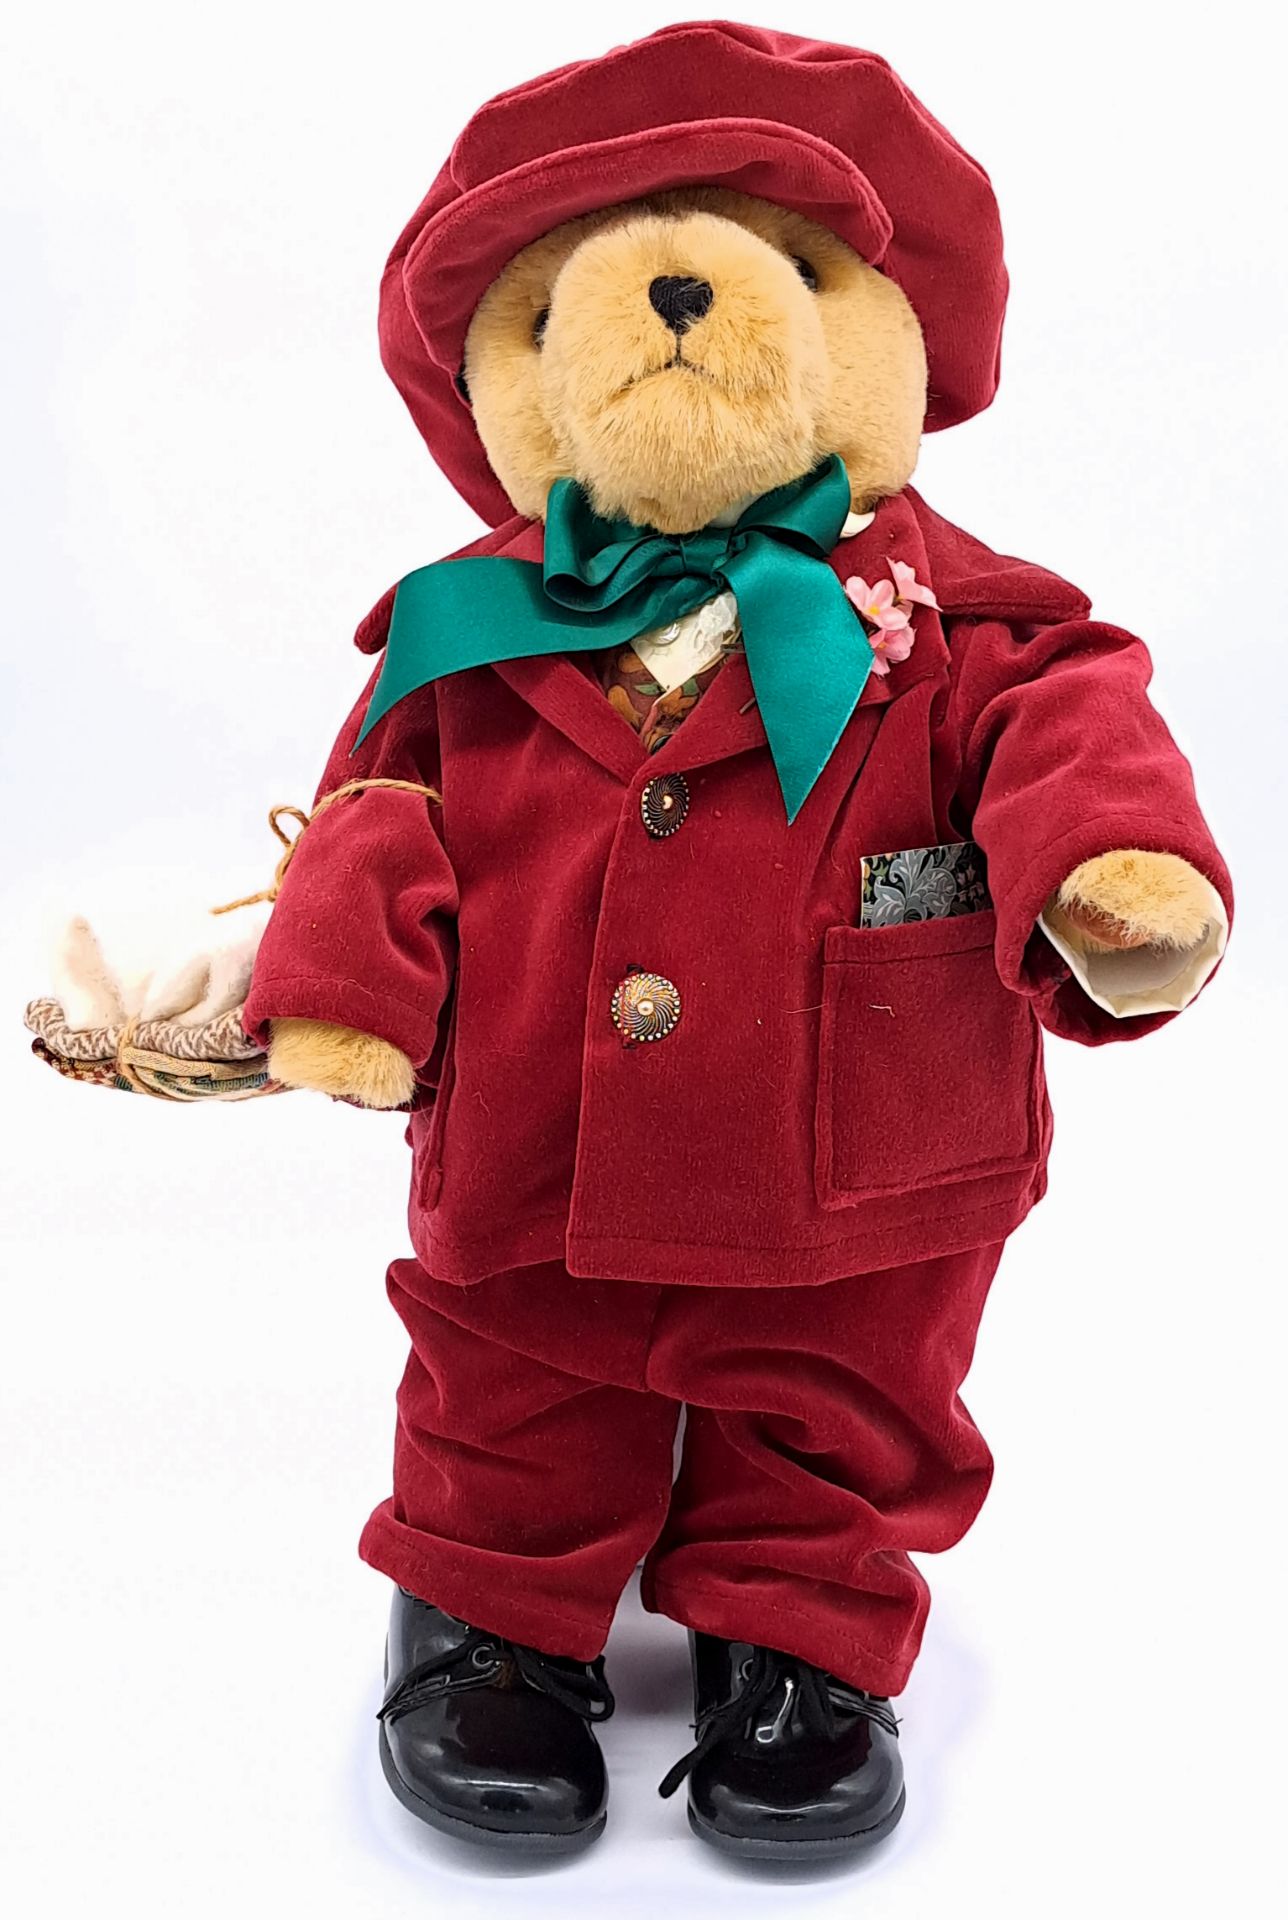 Dean's Rag Book Lakeland Bears (UK) William Morris teddy bear